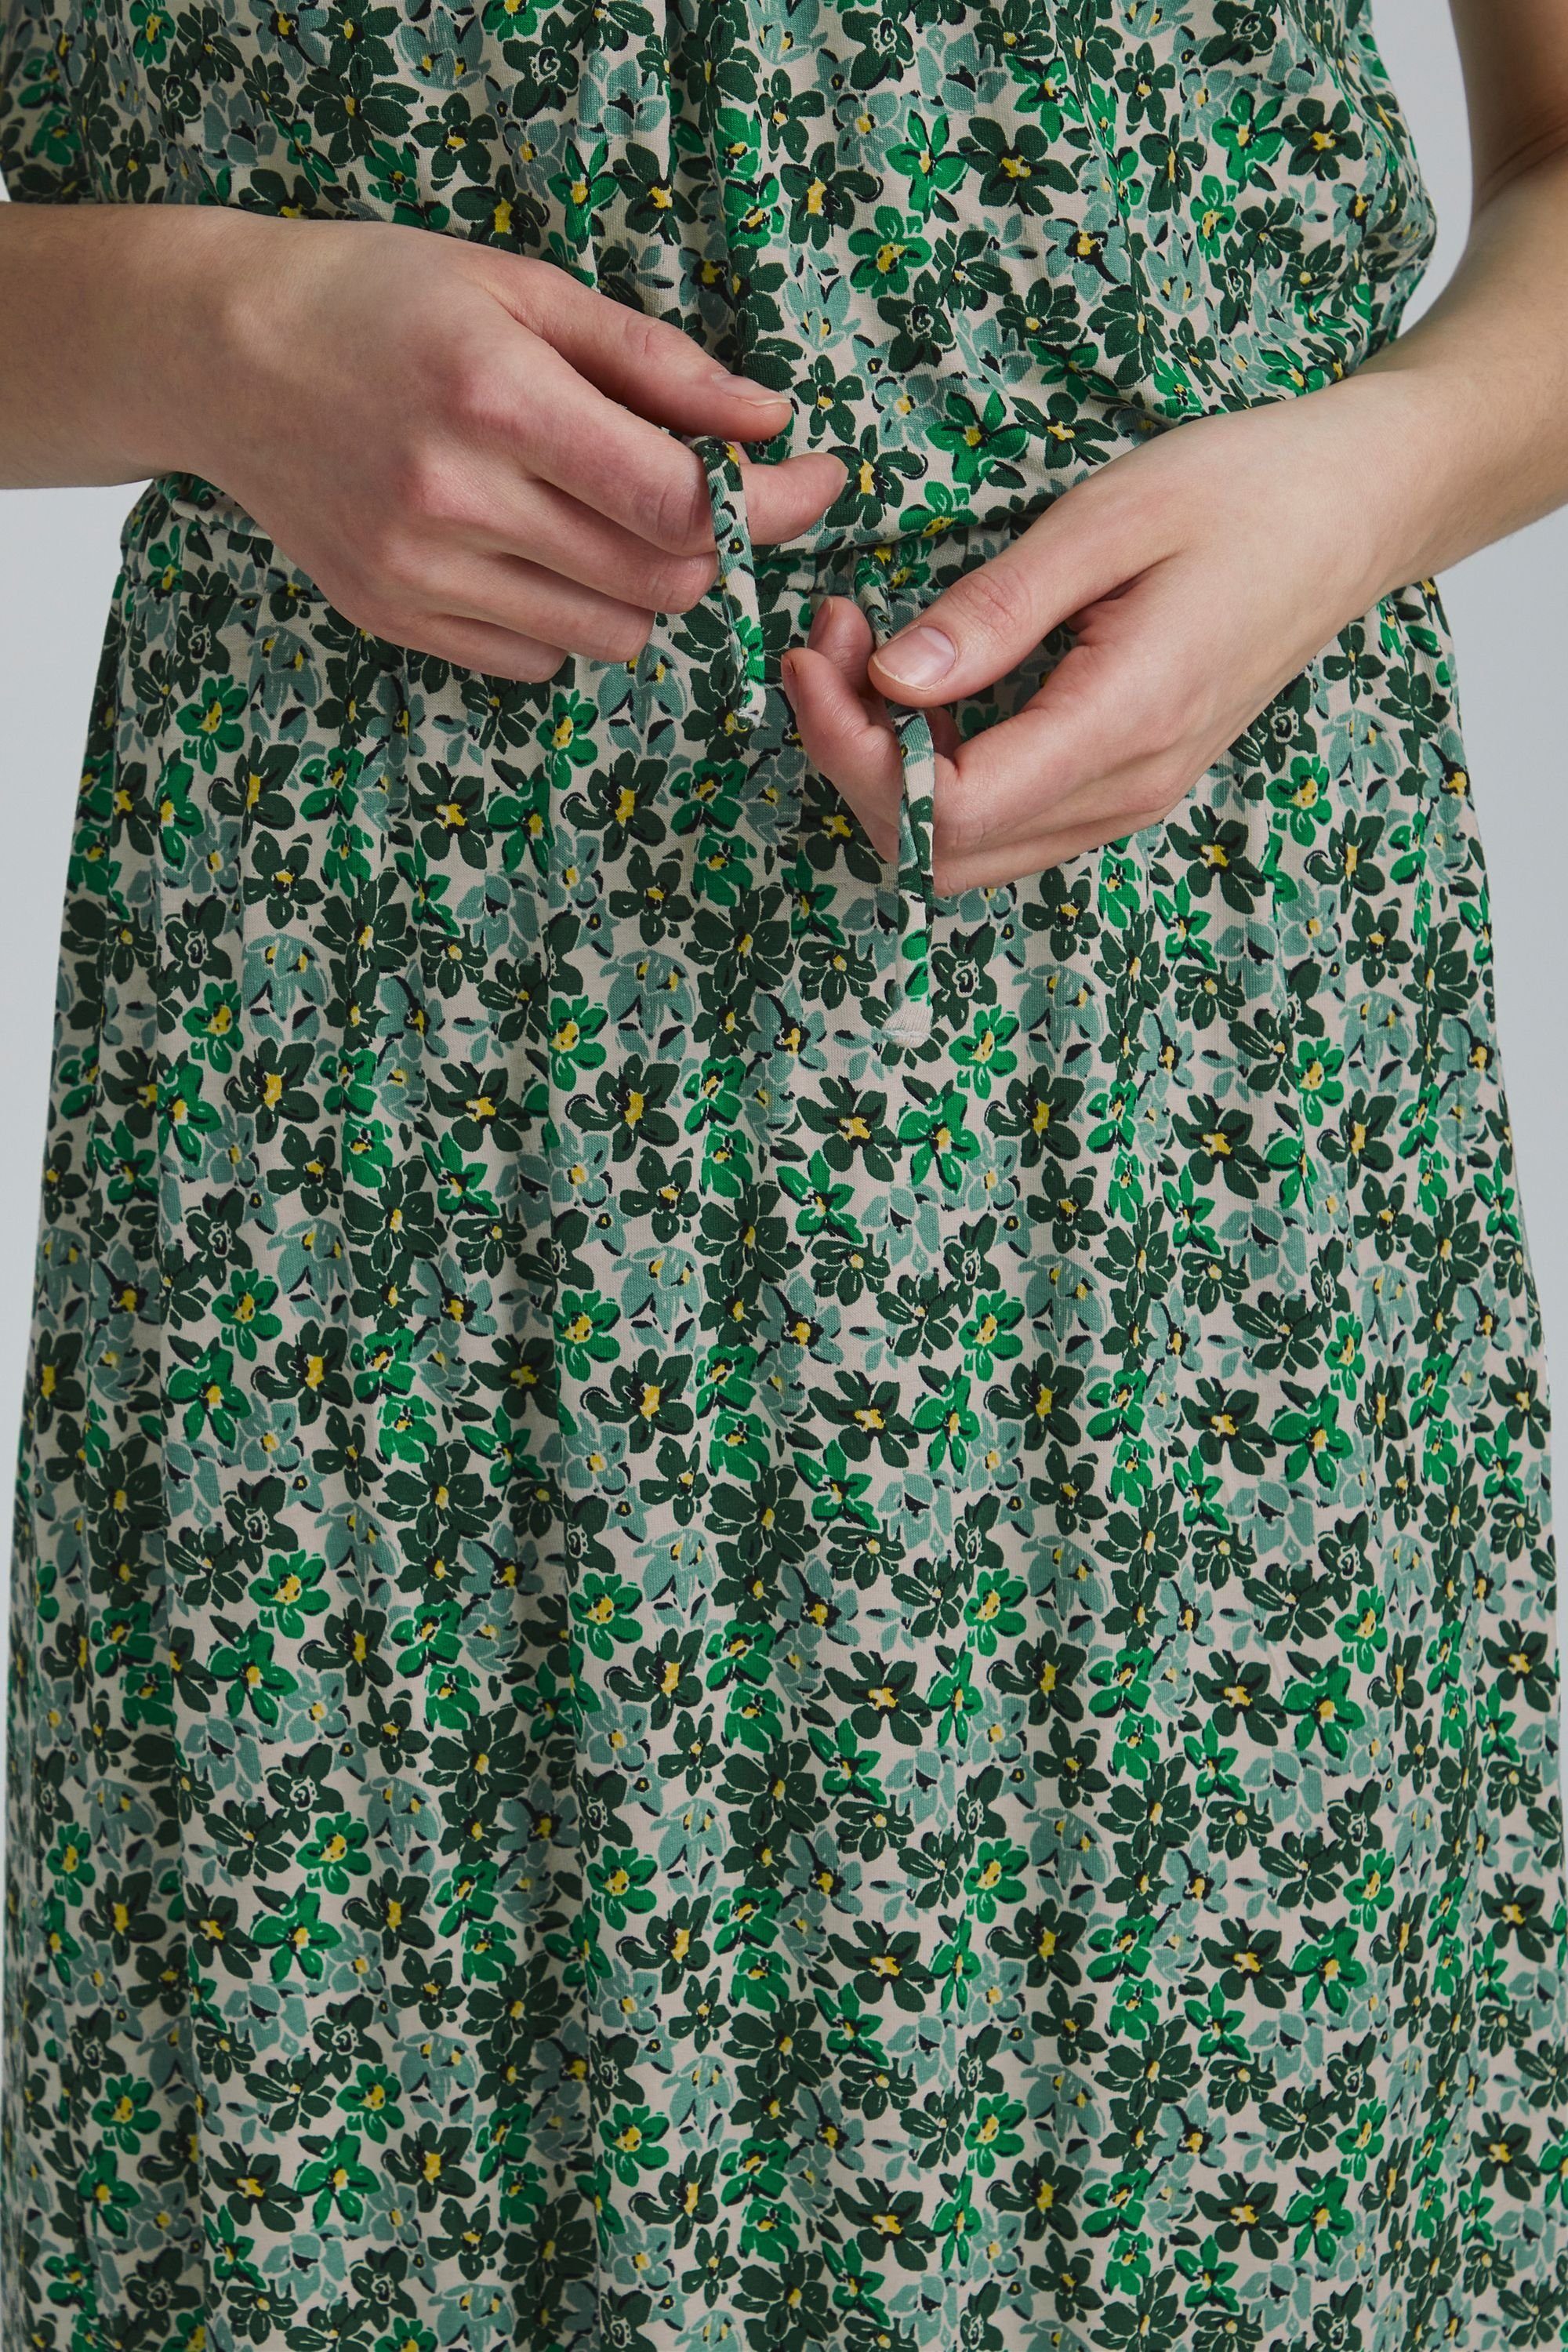 fransa Blusenkleid Fransa FRFEDOT 5 20610508 Malachite Green - Dress mix